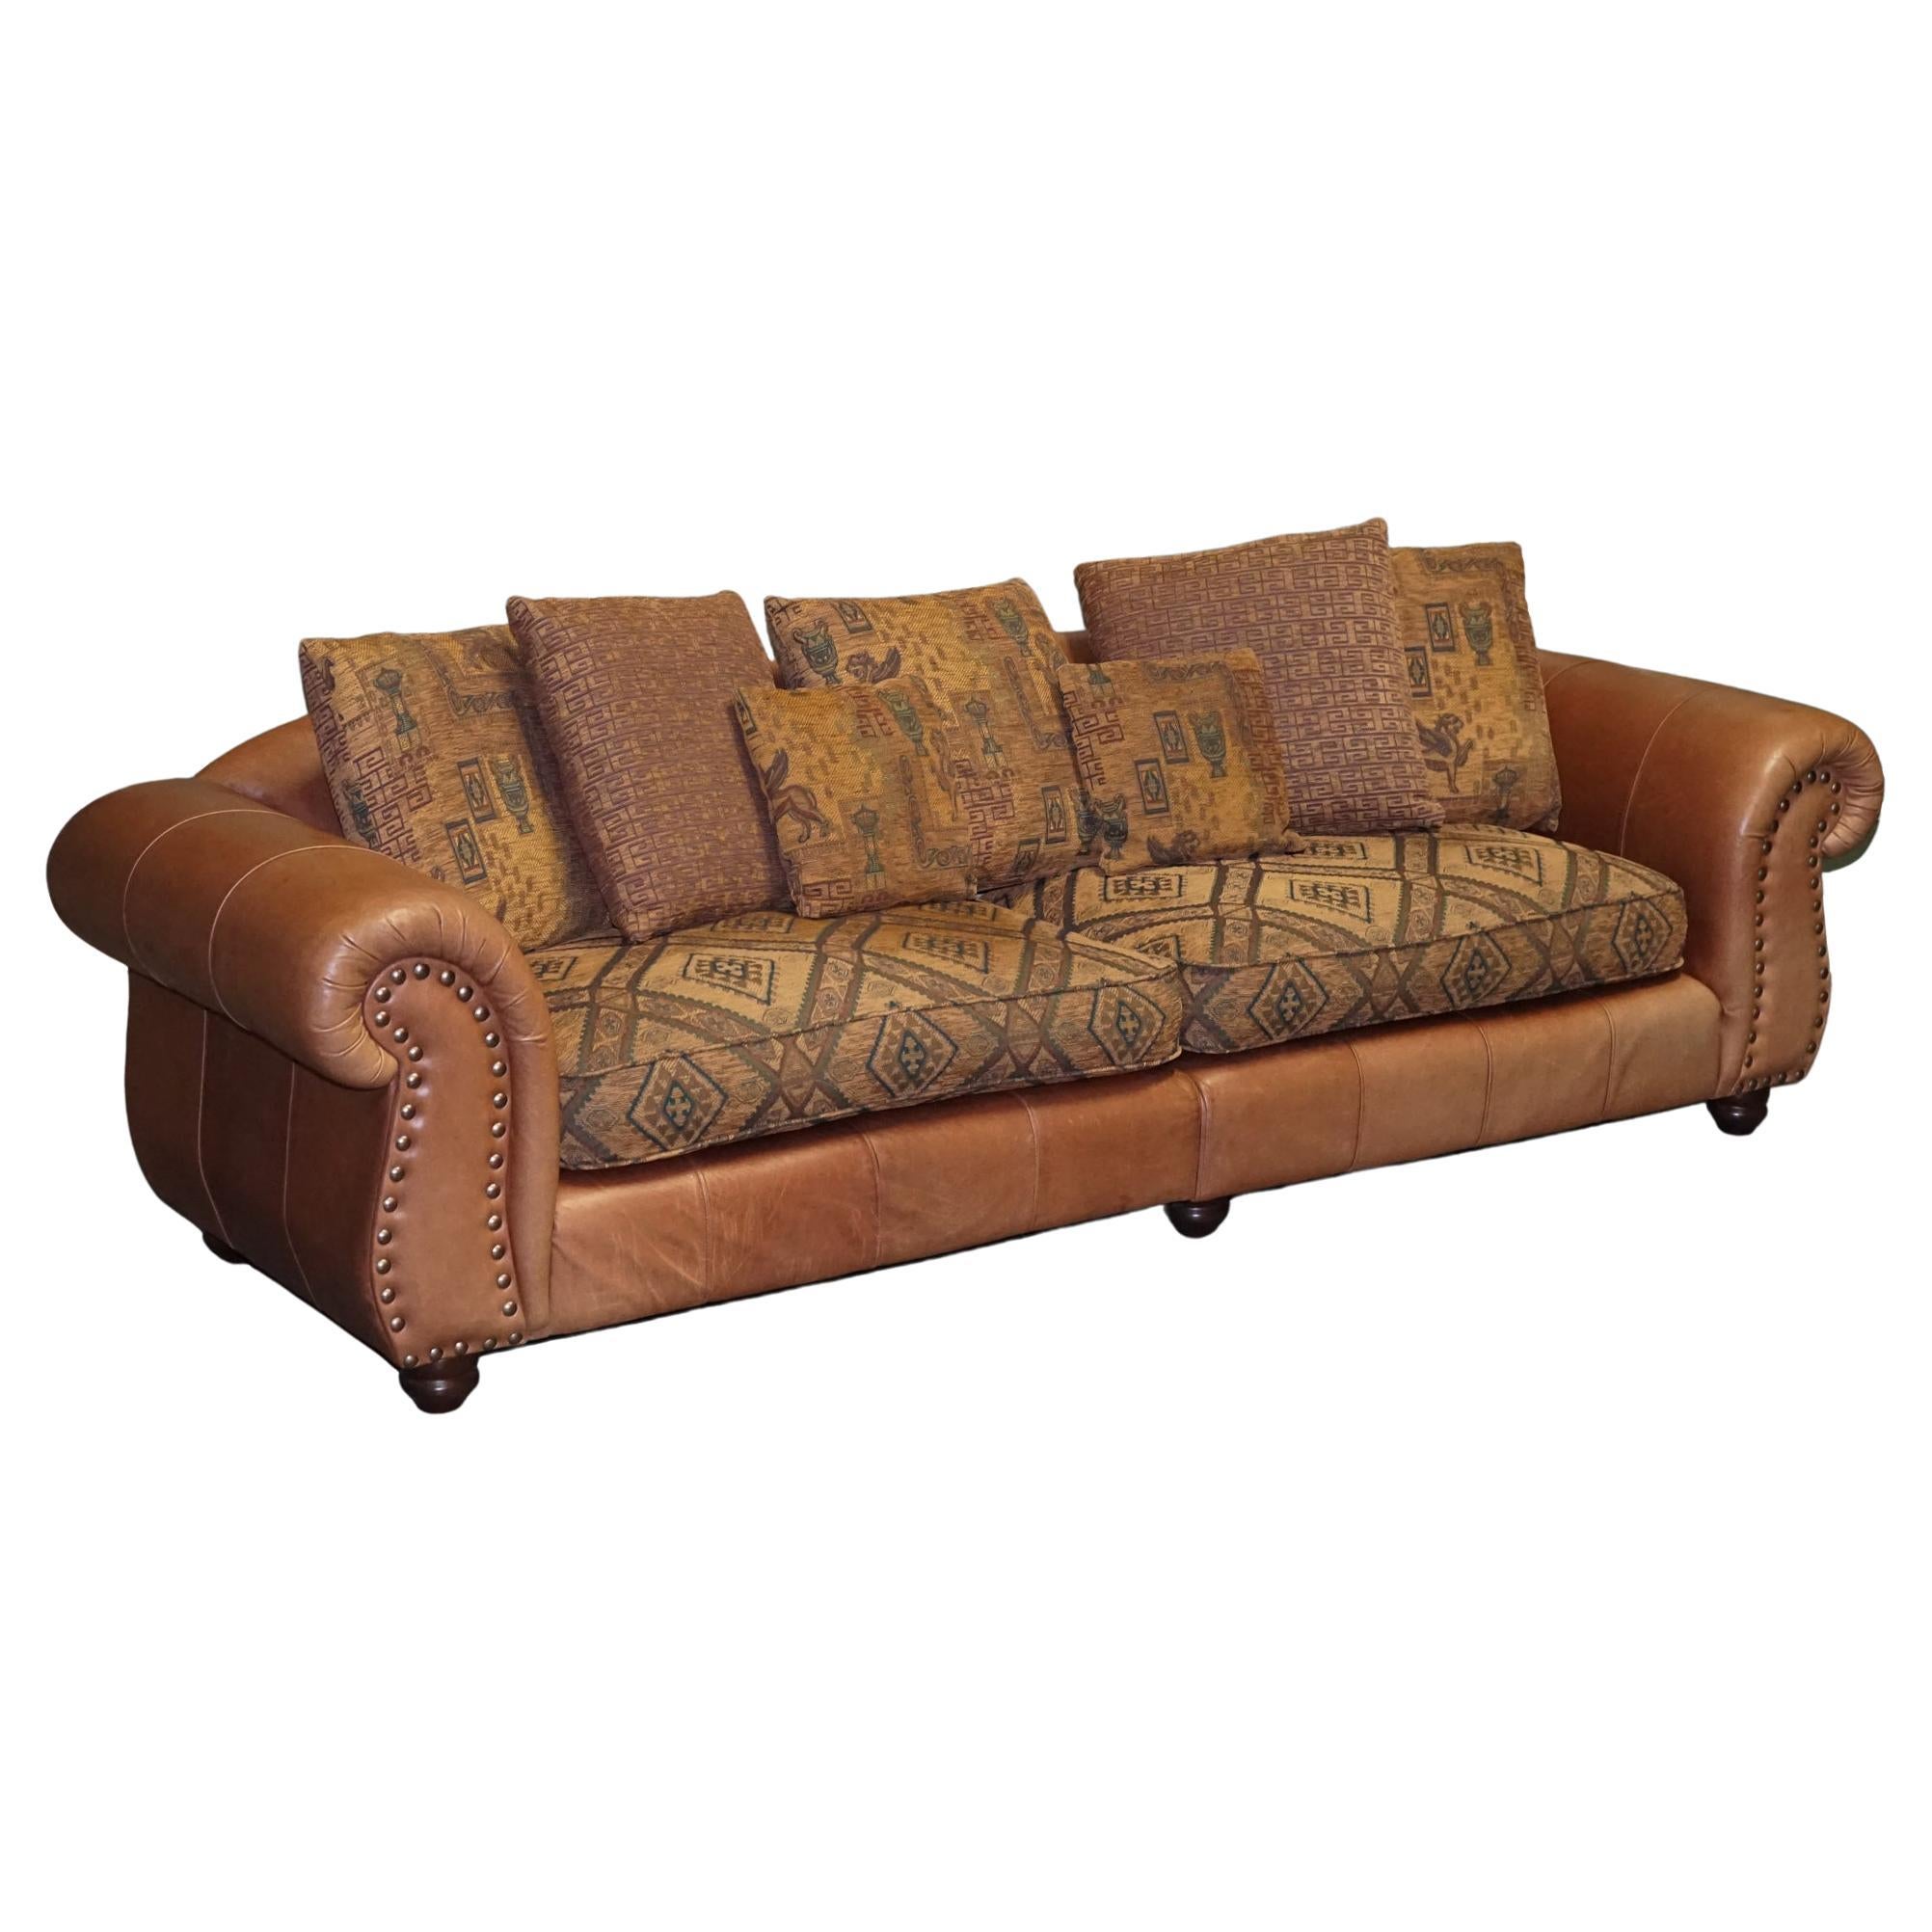 Stunning Thomas Lloyd Leather with Egyptian Pattern Fabric Grand Sofa